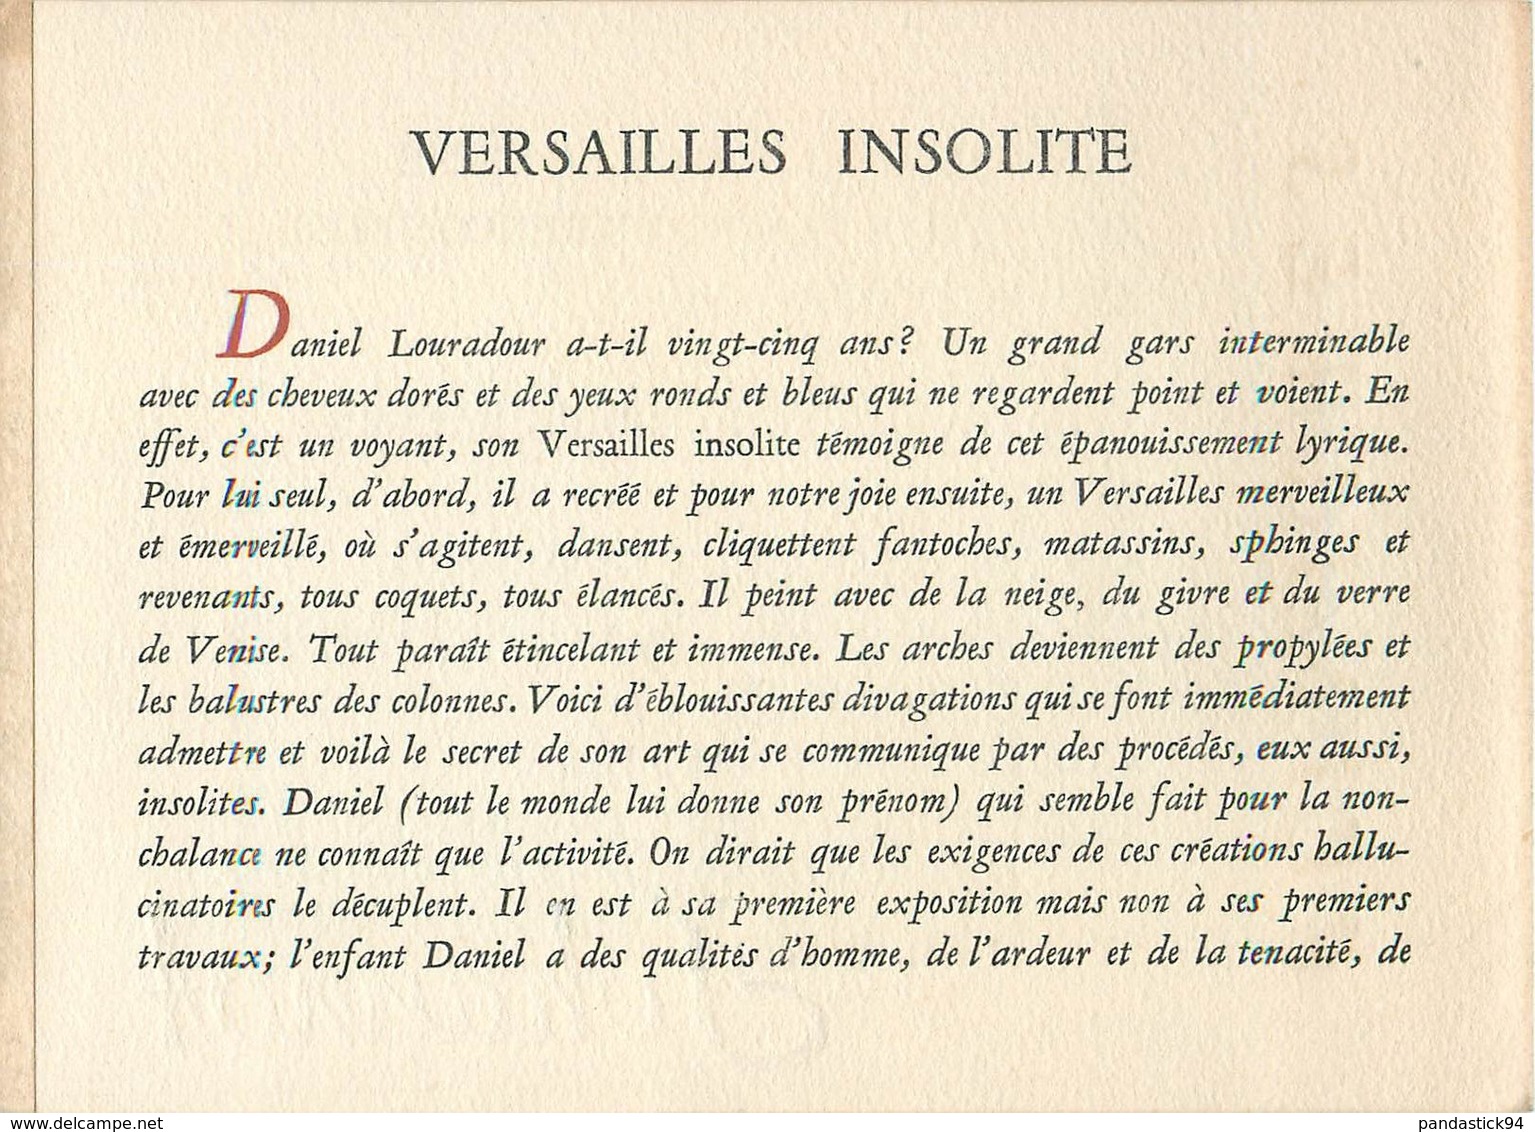 VIEUX PAPIERS PARIS IIIe PUBLICITE LOURADOUR VERSAILLES INSOLITE GALERIE MARFOREN 1955  ETAT VOIR IMAGES - Colecciones